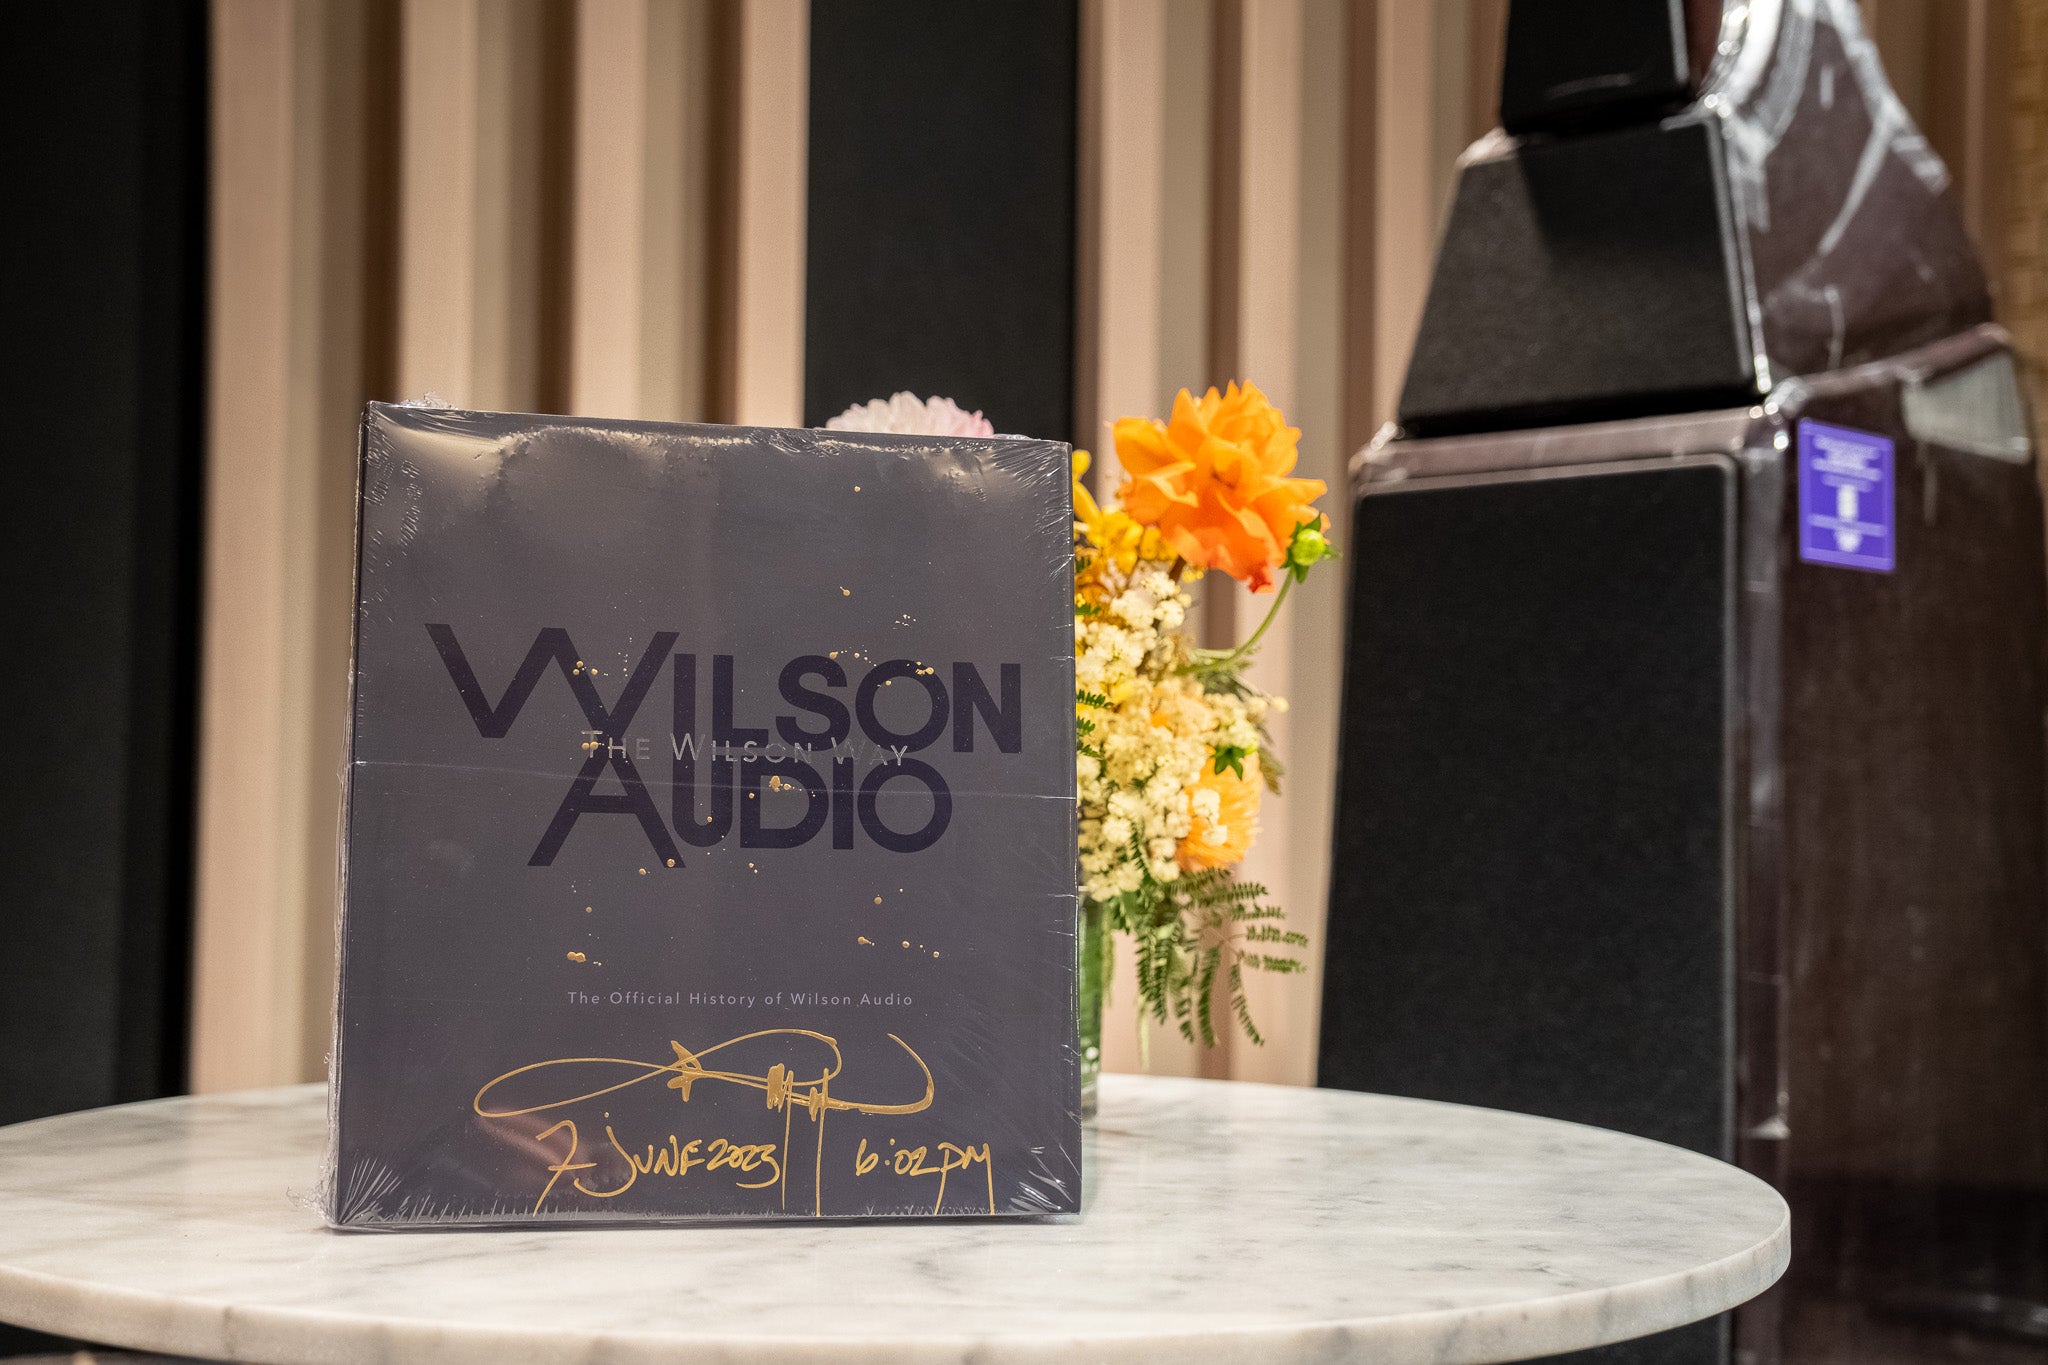 Wilson Audio "The Wilson Way" - Daryl Wilson Autographed Edition